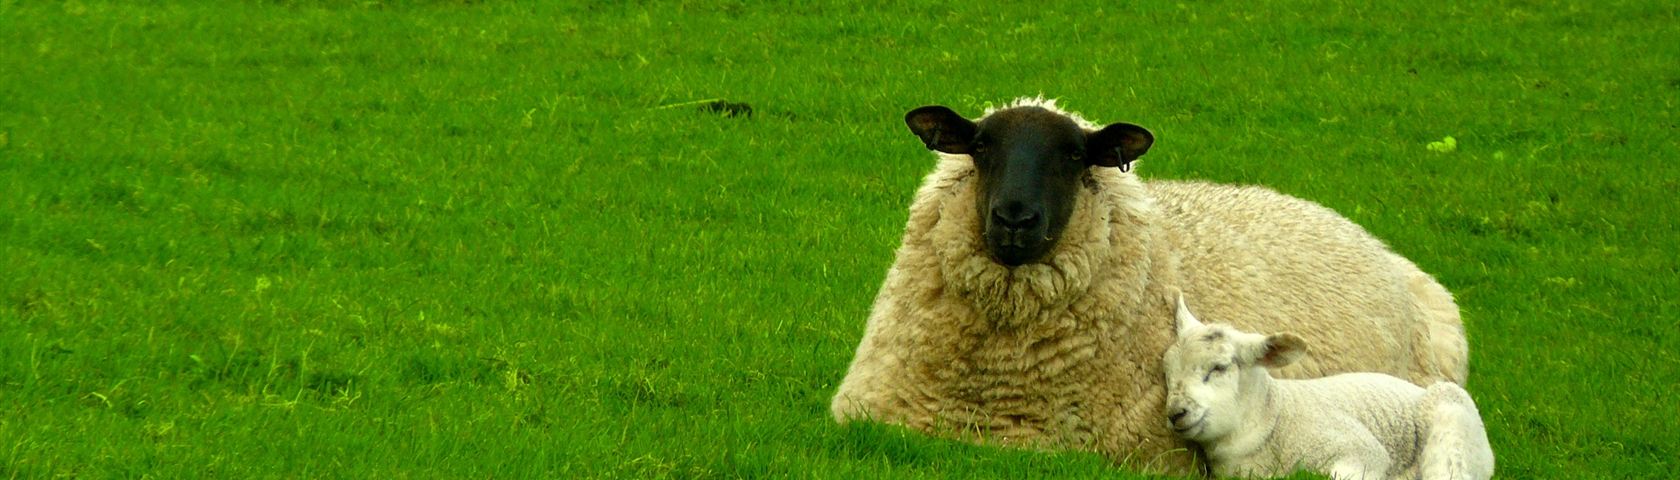 Devon Sheep with Lamb